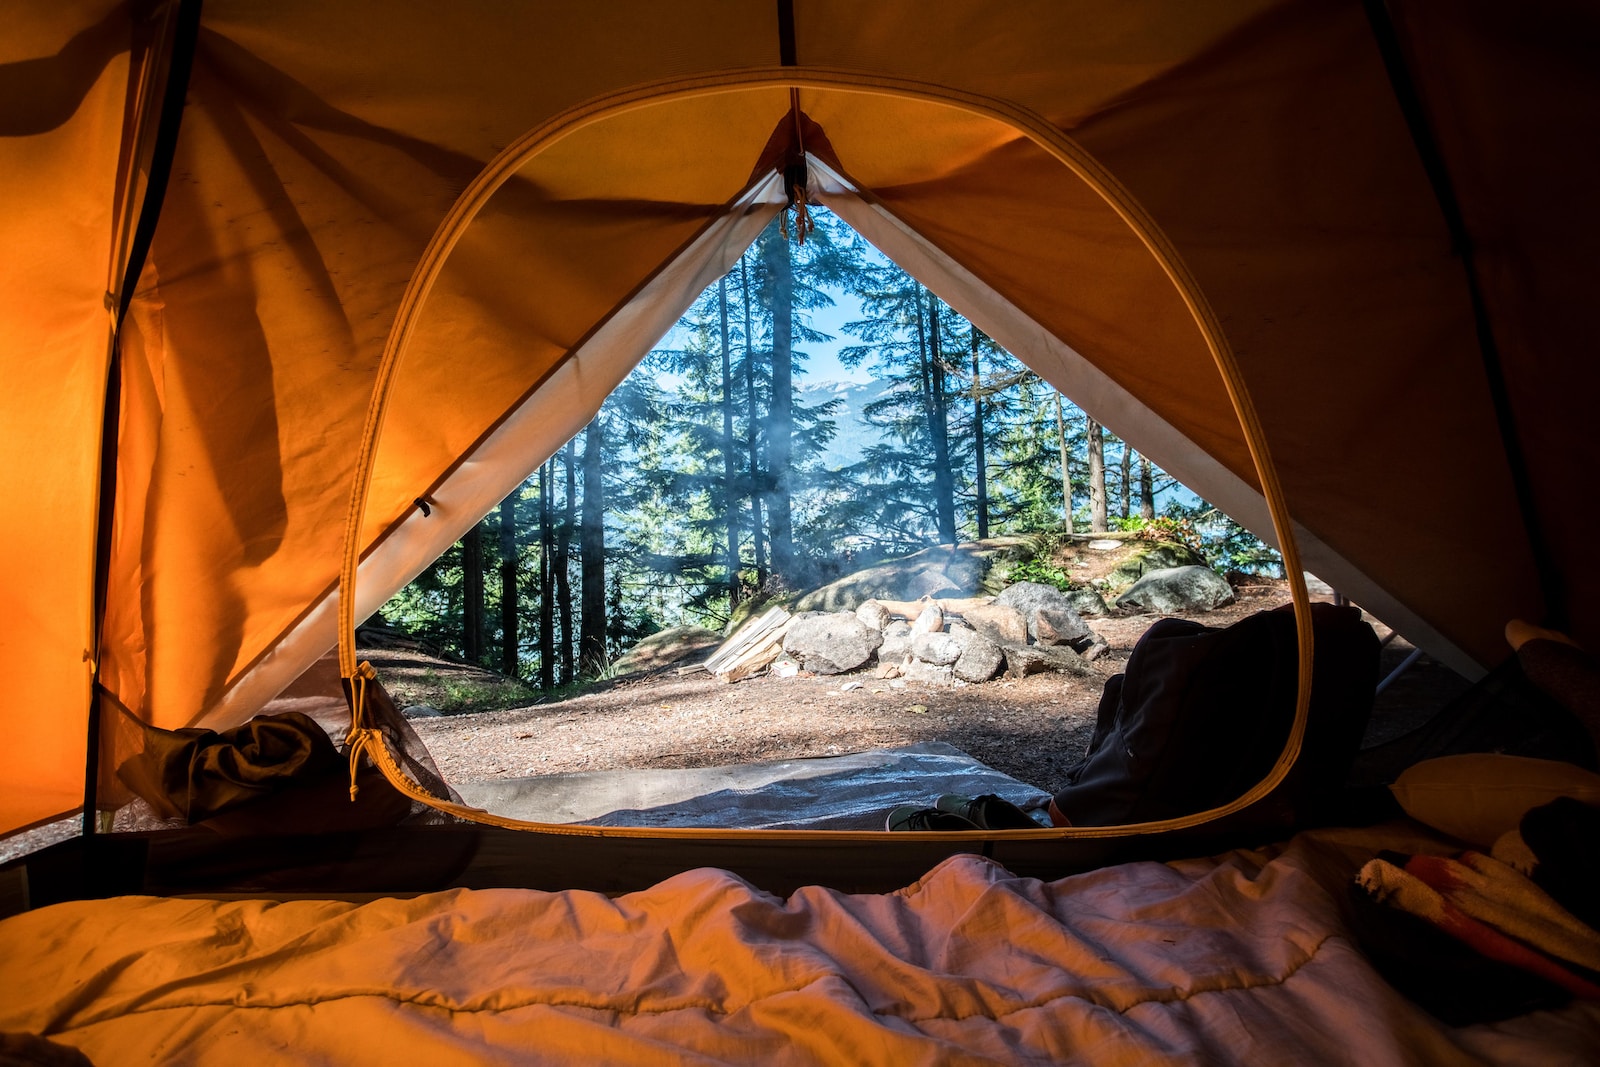 Camping orange camping tent near green trees